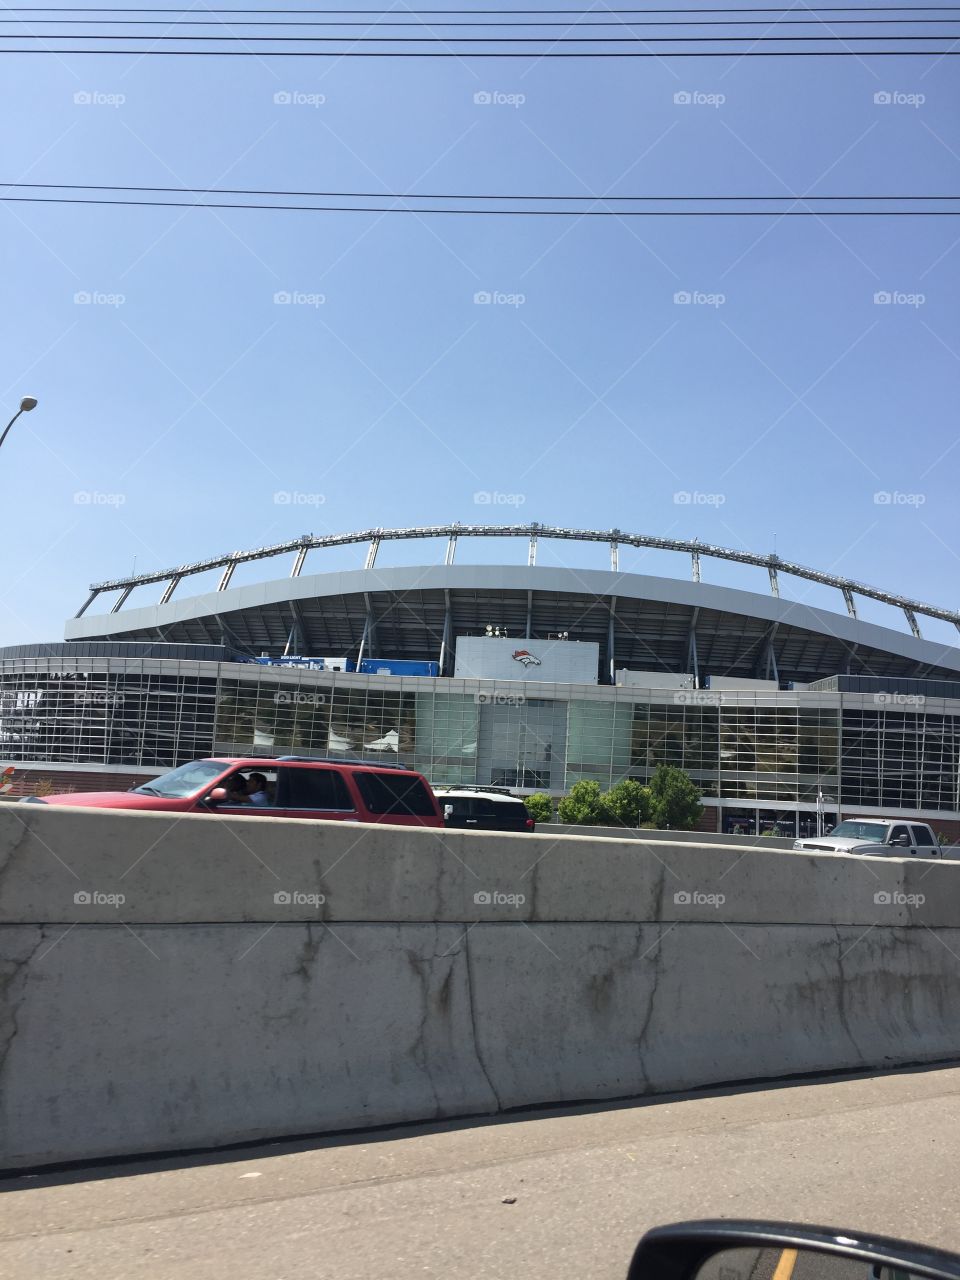 Home of the Broncos - Mile High Stadium